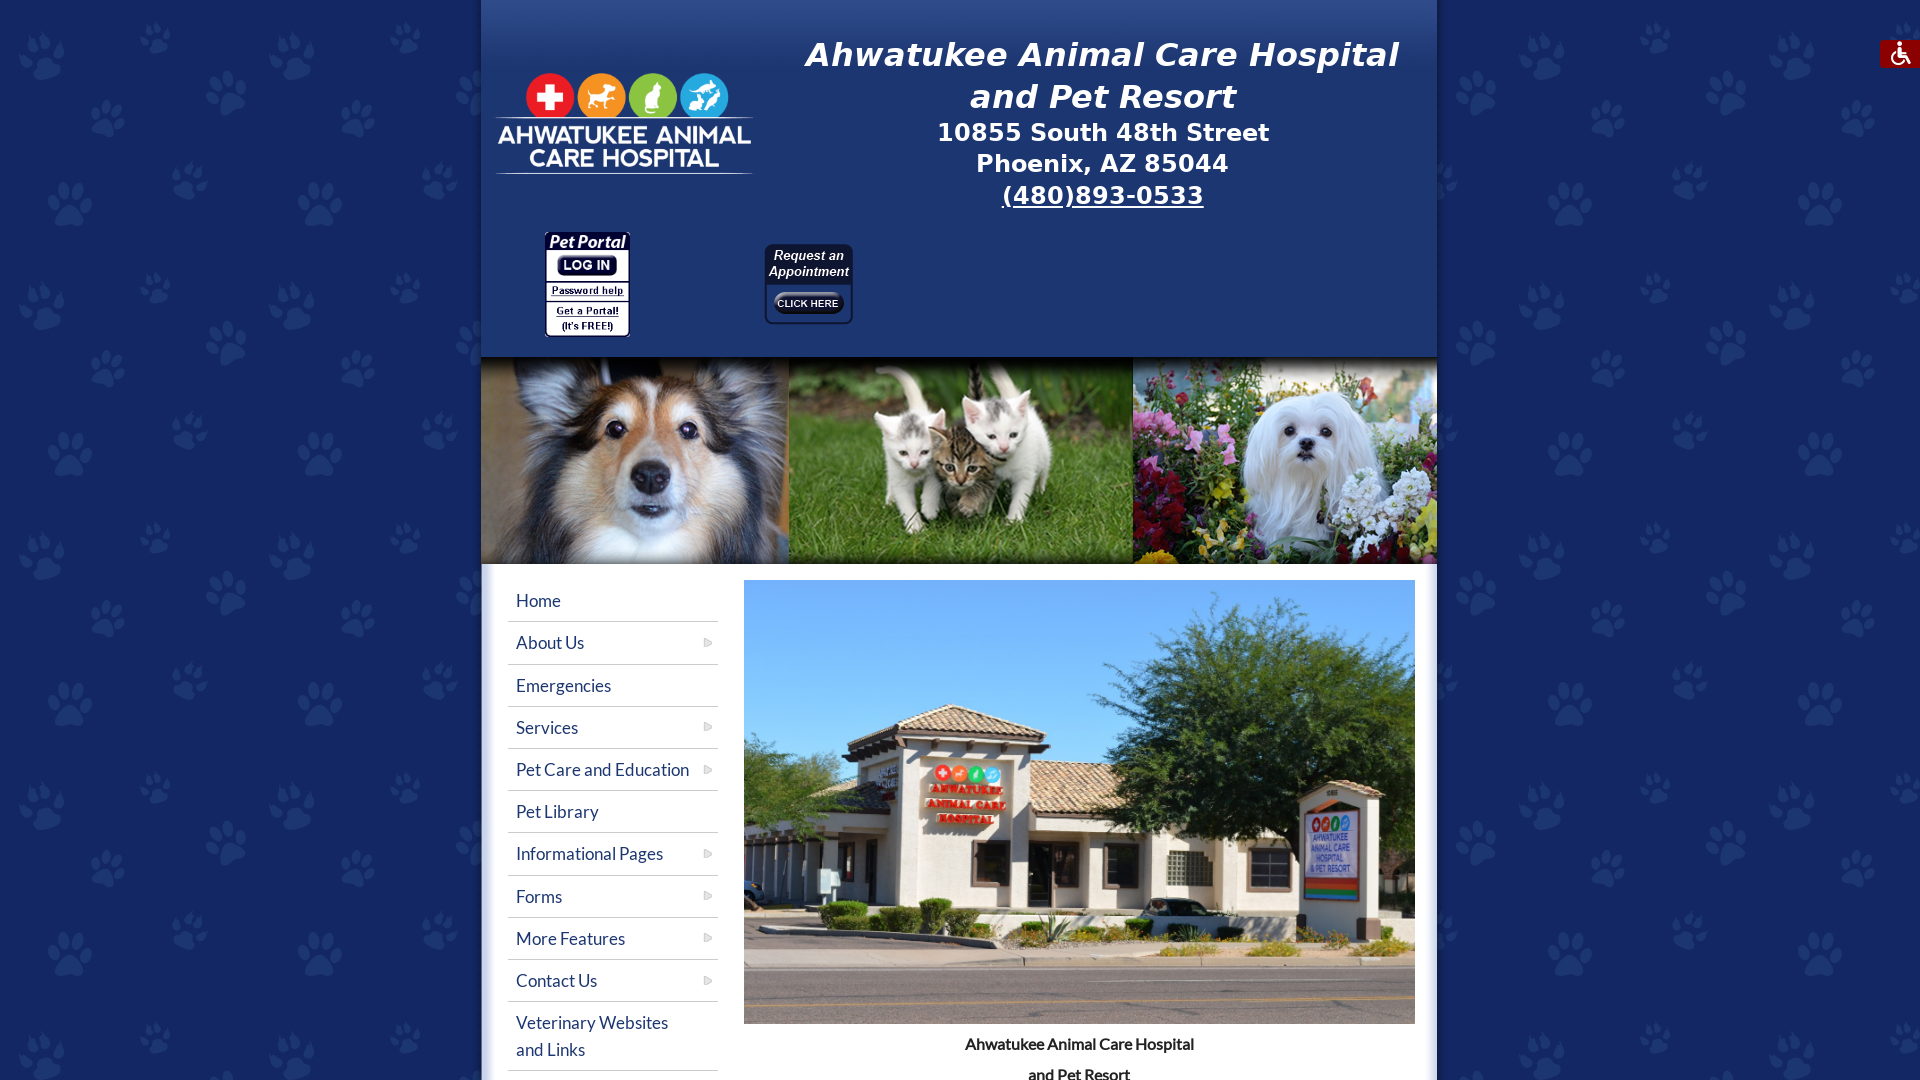 Ahwatukee Animal Care Hospital and Pet Resort